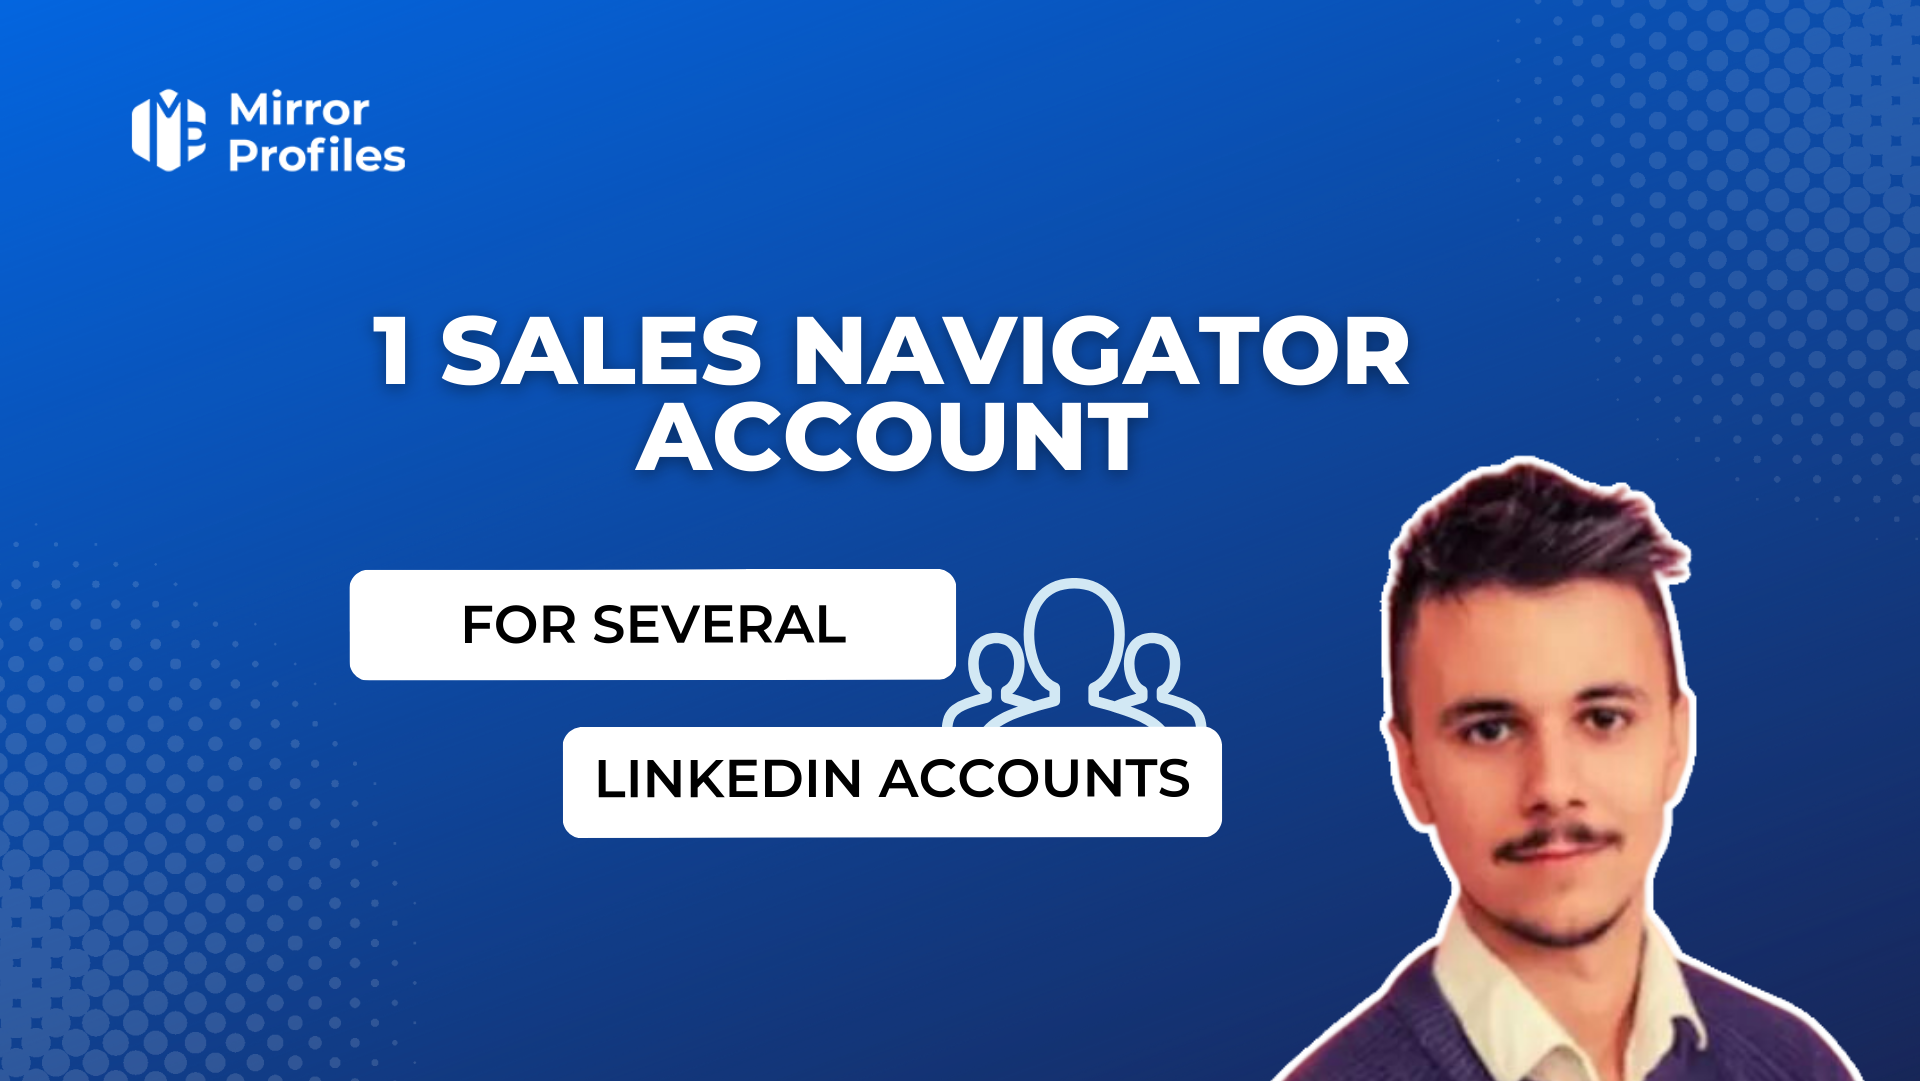 1 sales navigator account for several linkedIn accounts